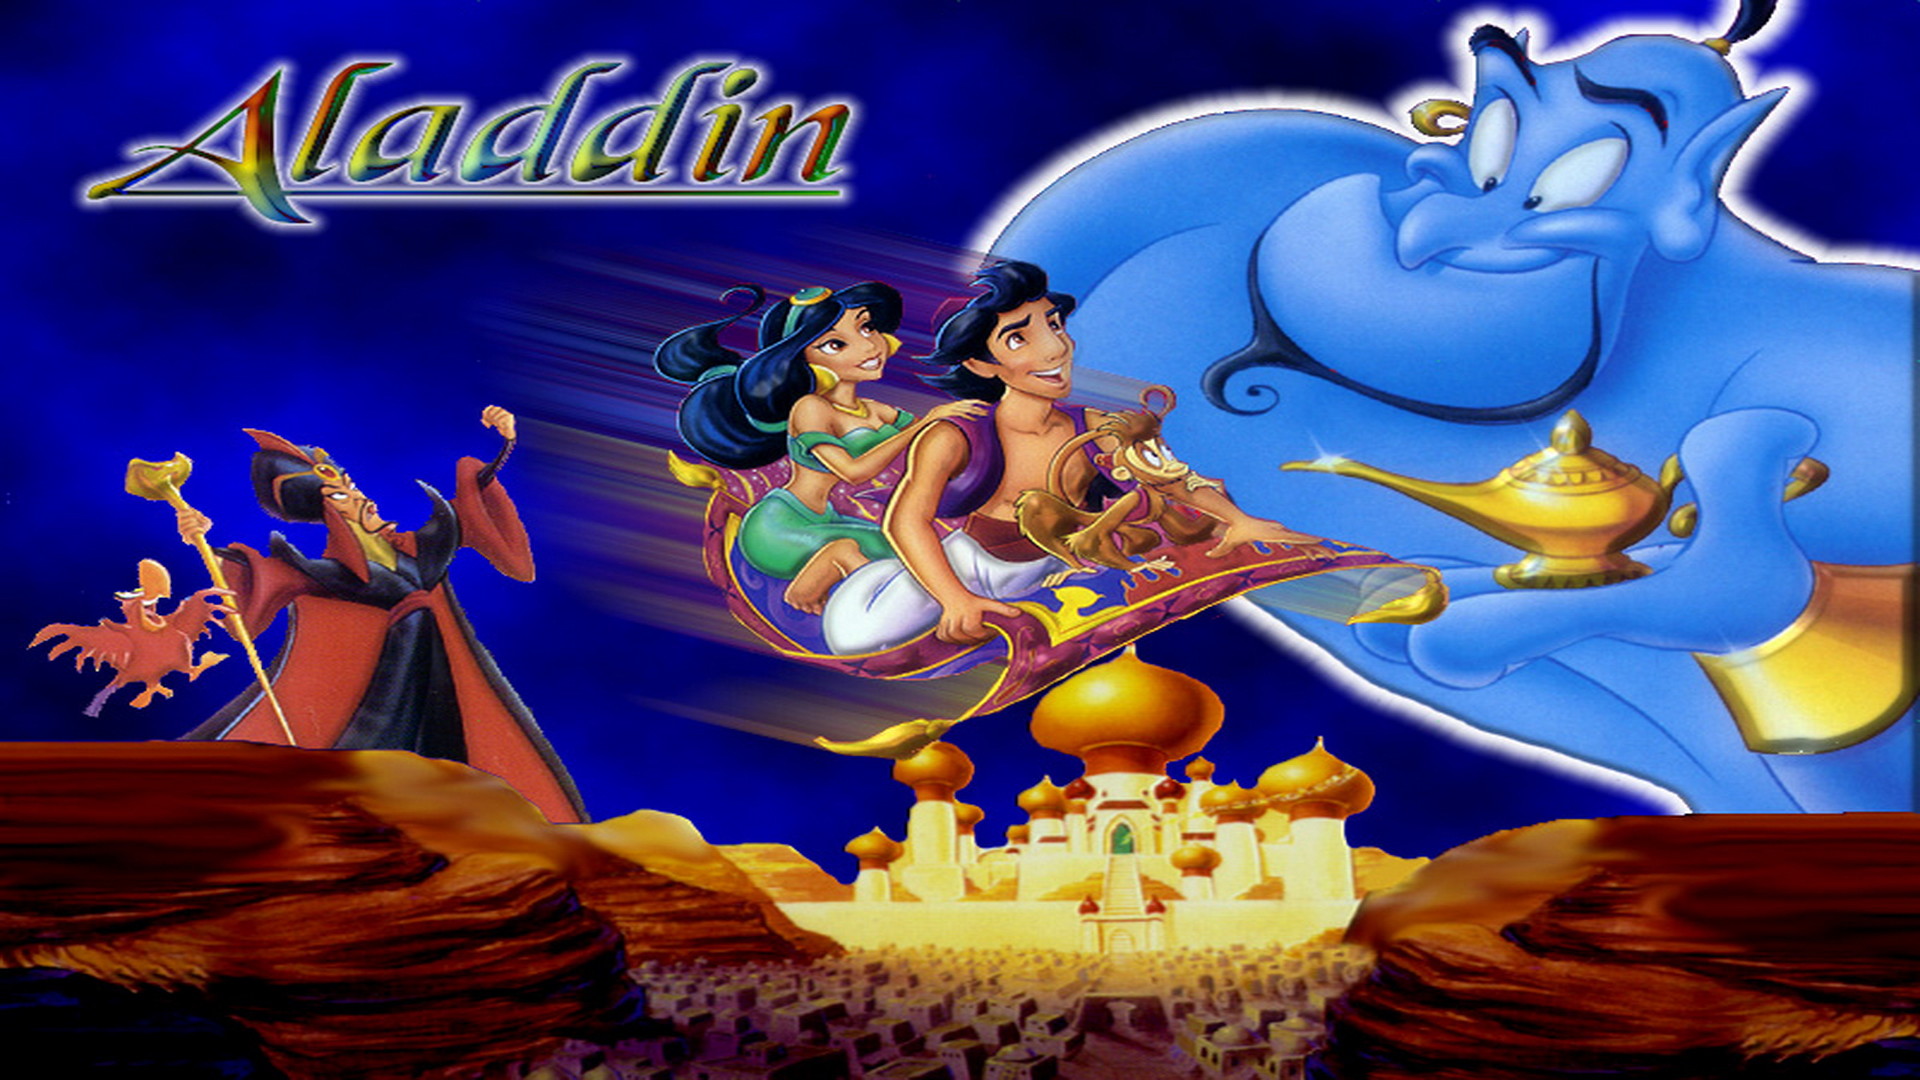 1920x1080 Disney Wallpaper, Aladdin disney 7917646, HD Desktop .